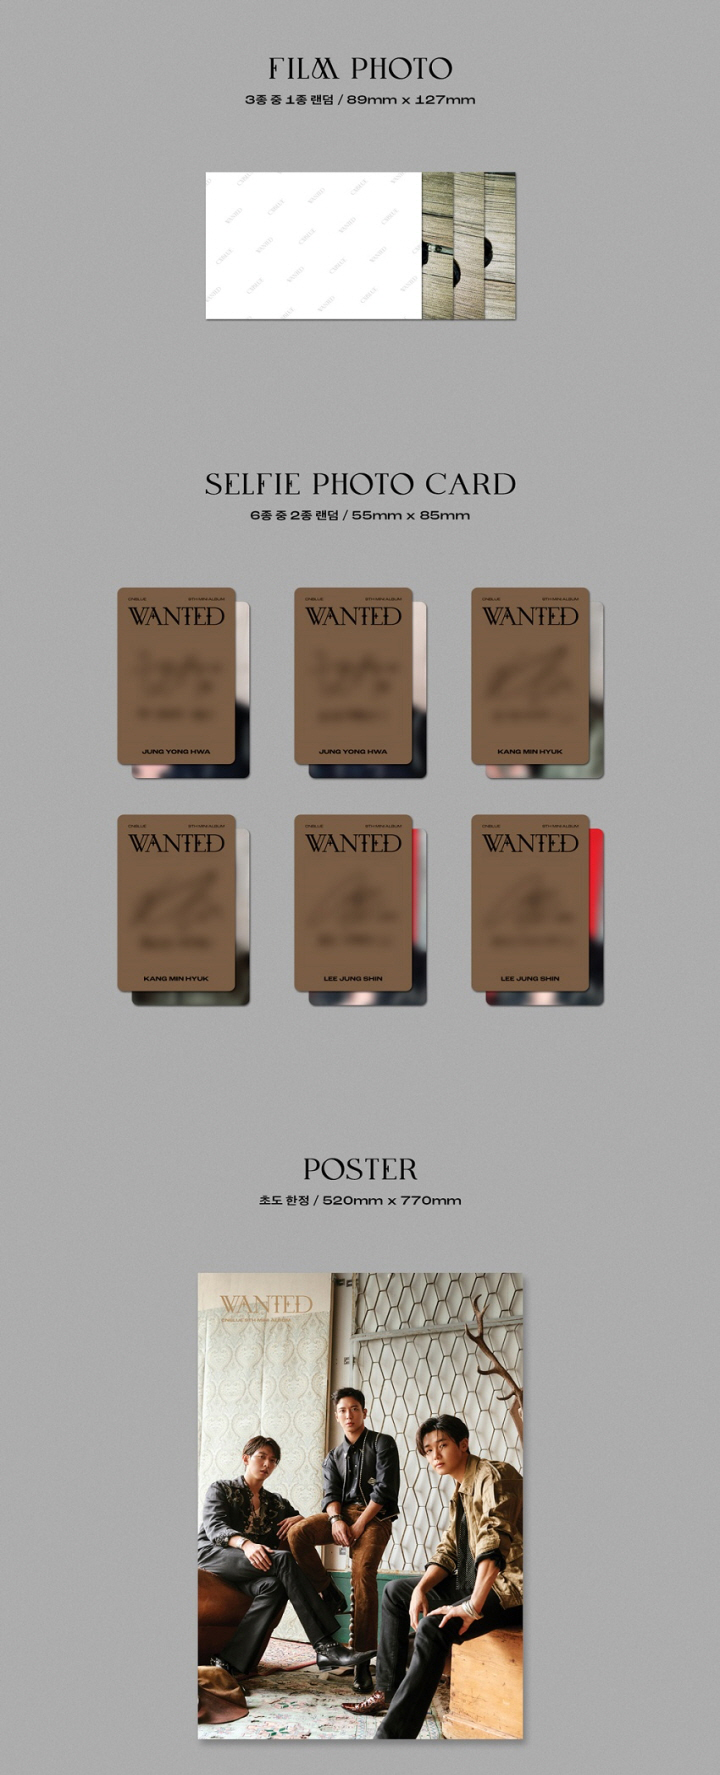 CNBLUE - [WANTED] 9th Mini Album